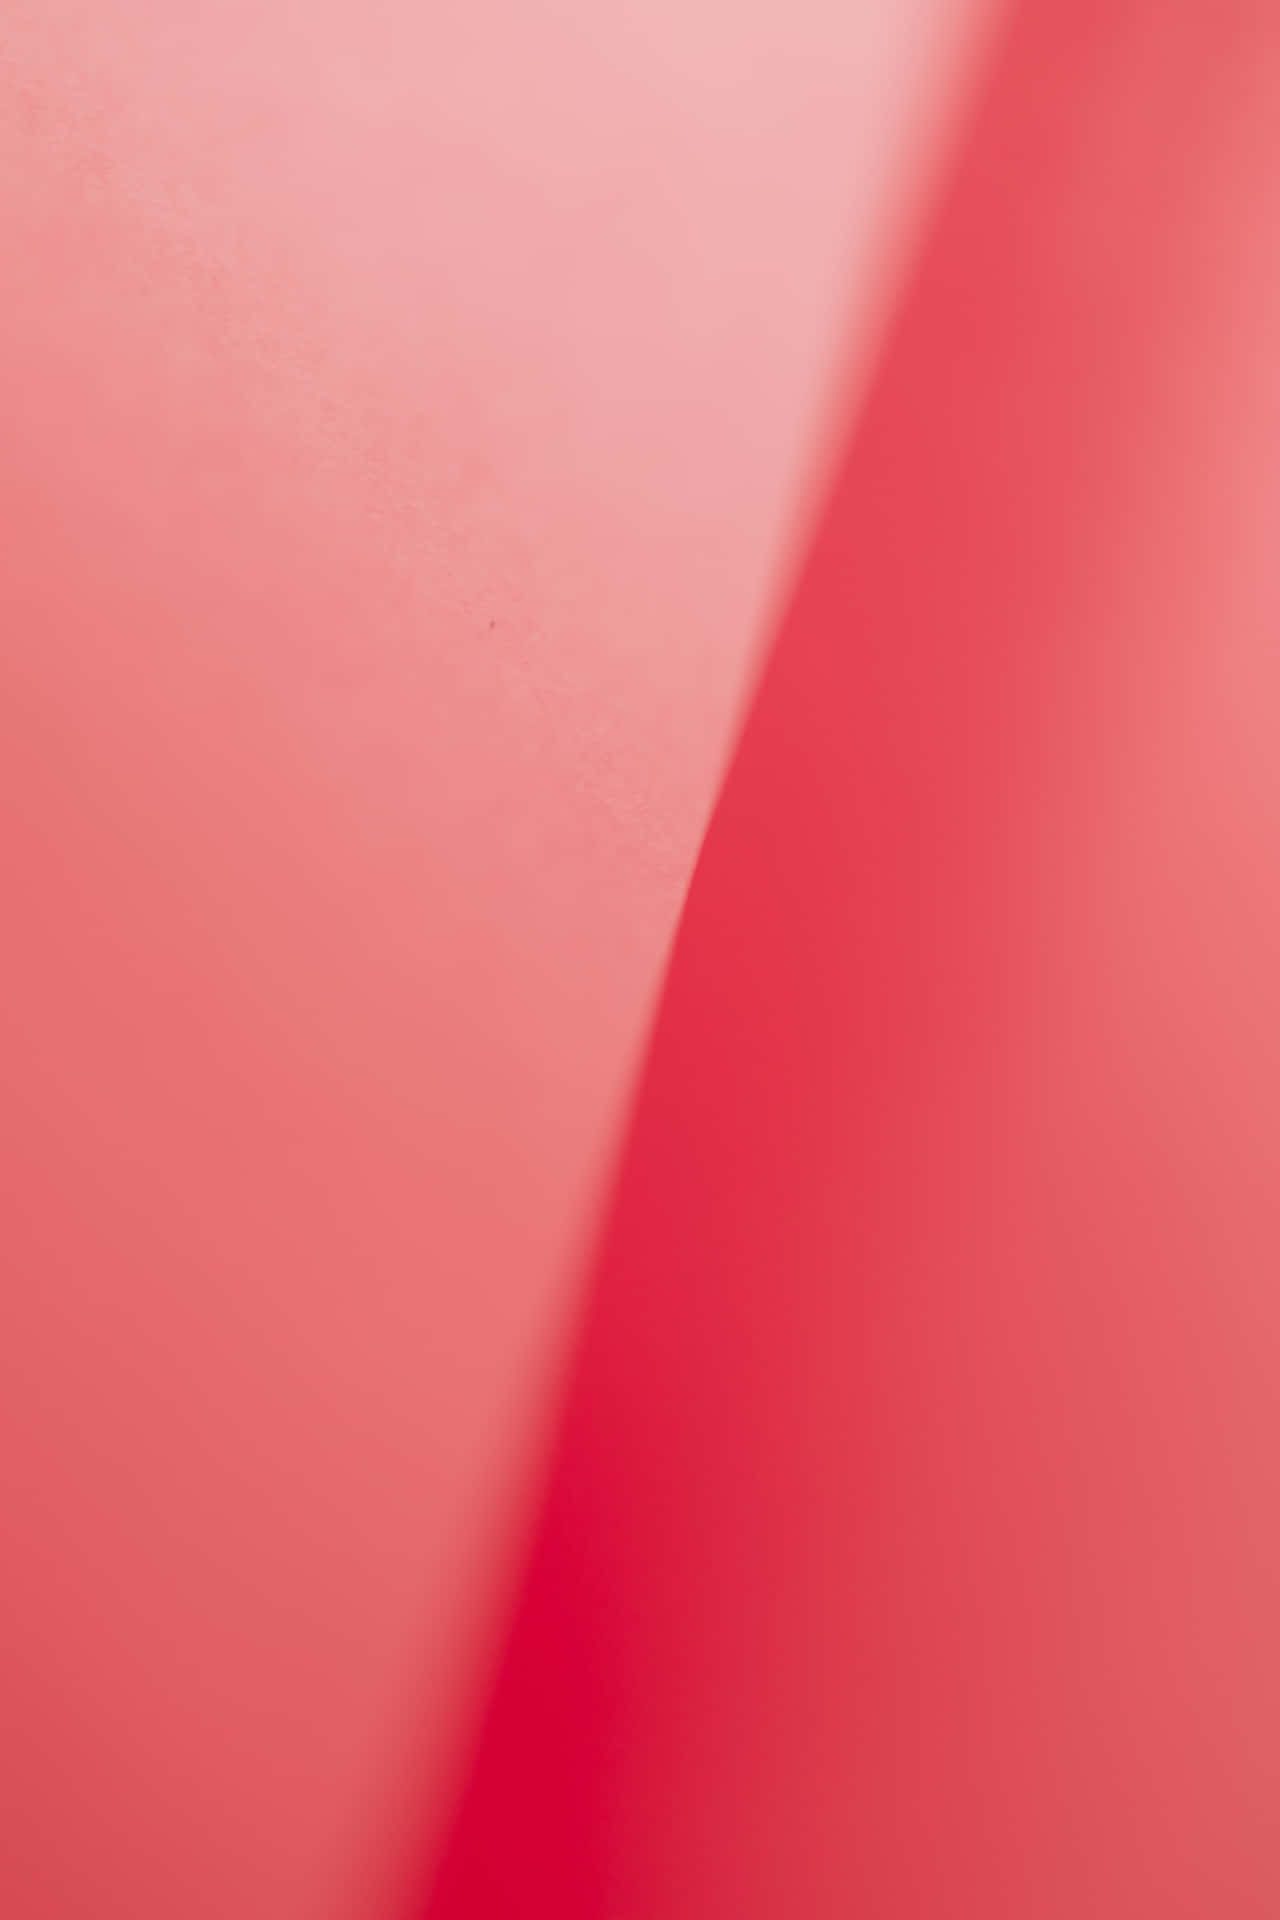 A Close Up Of A Pink Paper Wallpaper